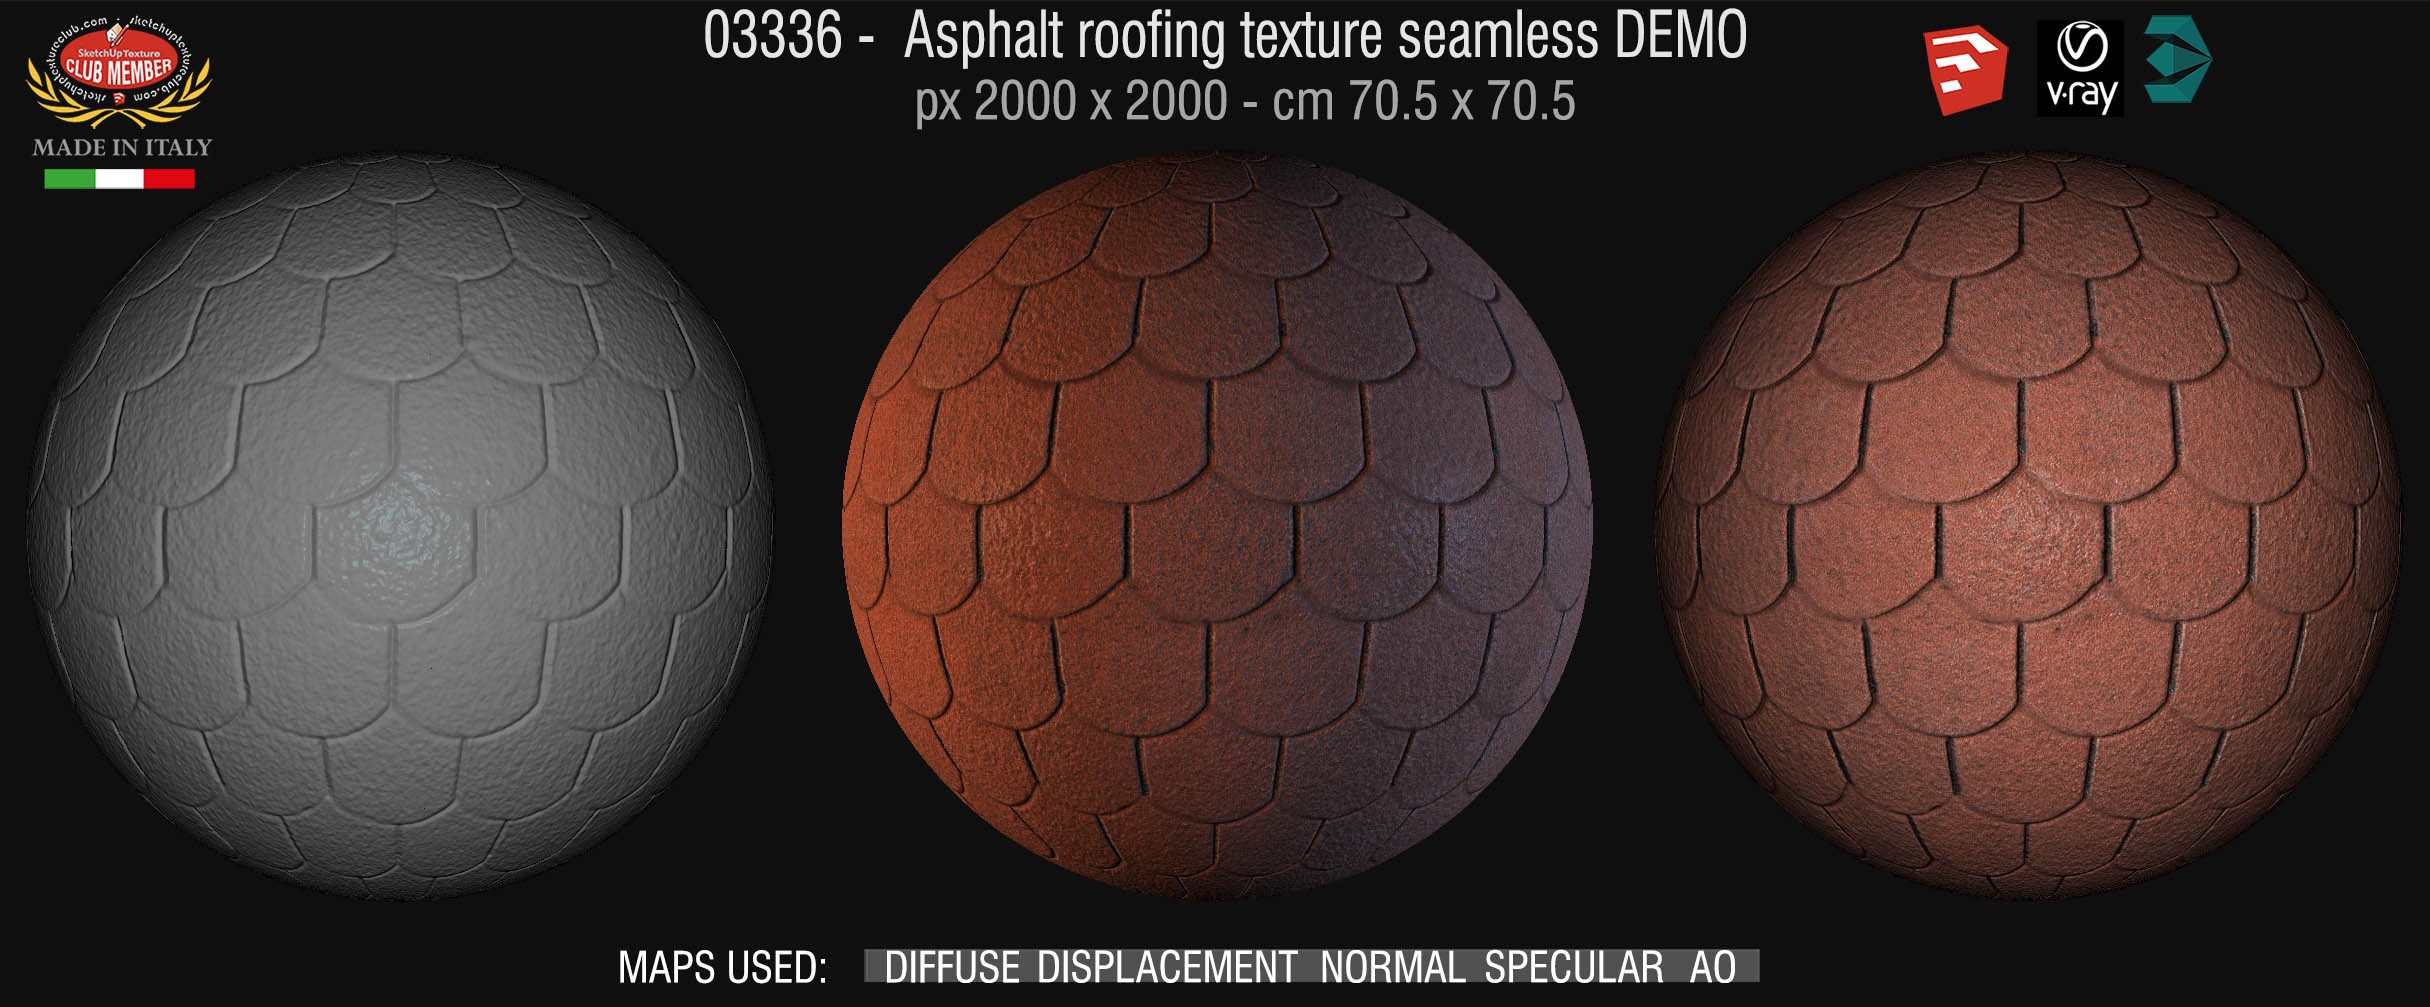 03336 Asphalt roofing texture seamless + maps DEMO